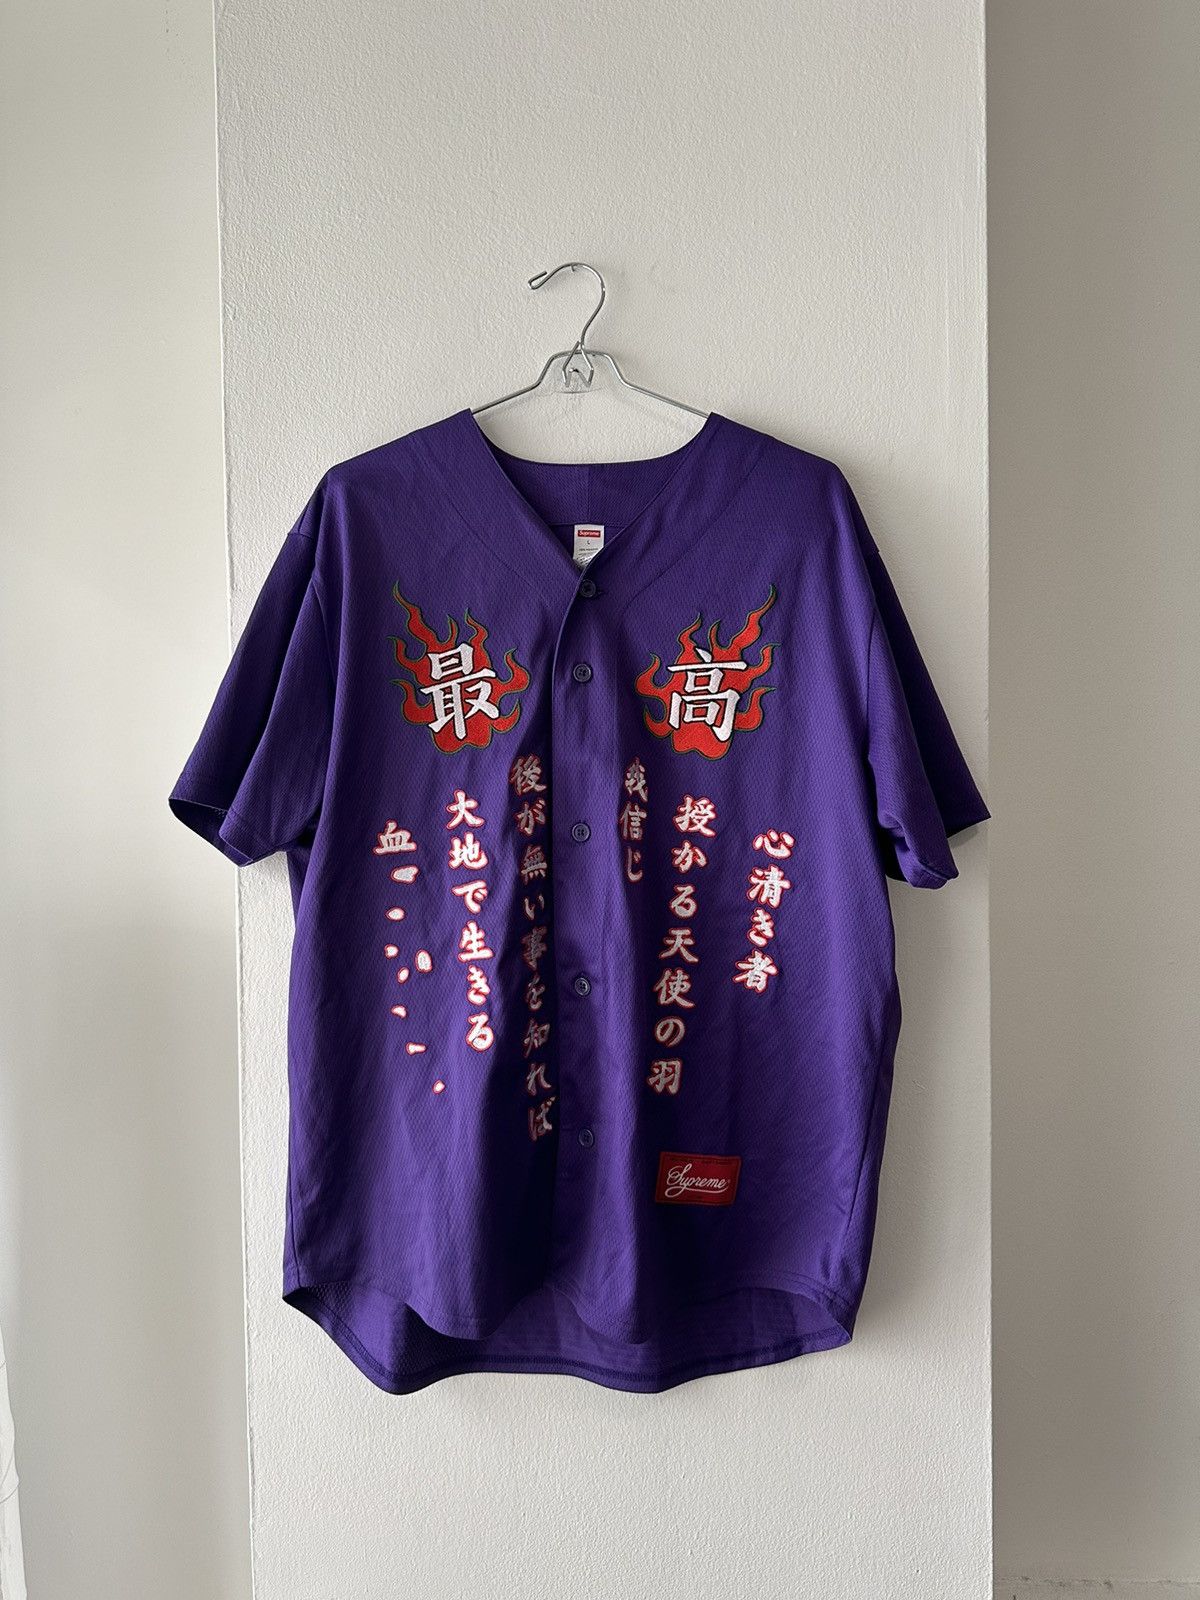 Supreme Embroidered Tiger Baseball Jersey | Grailed